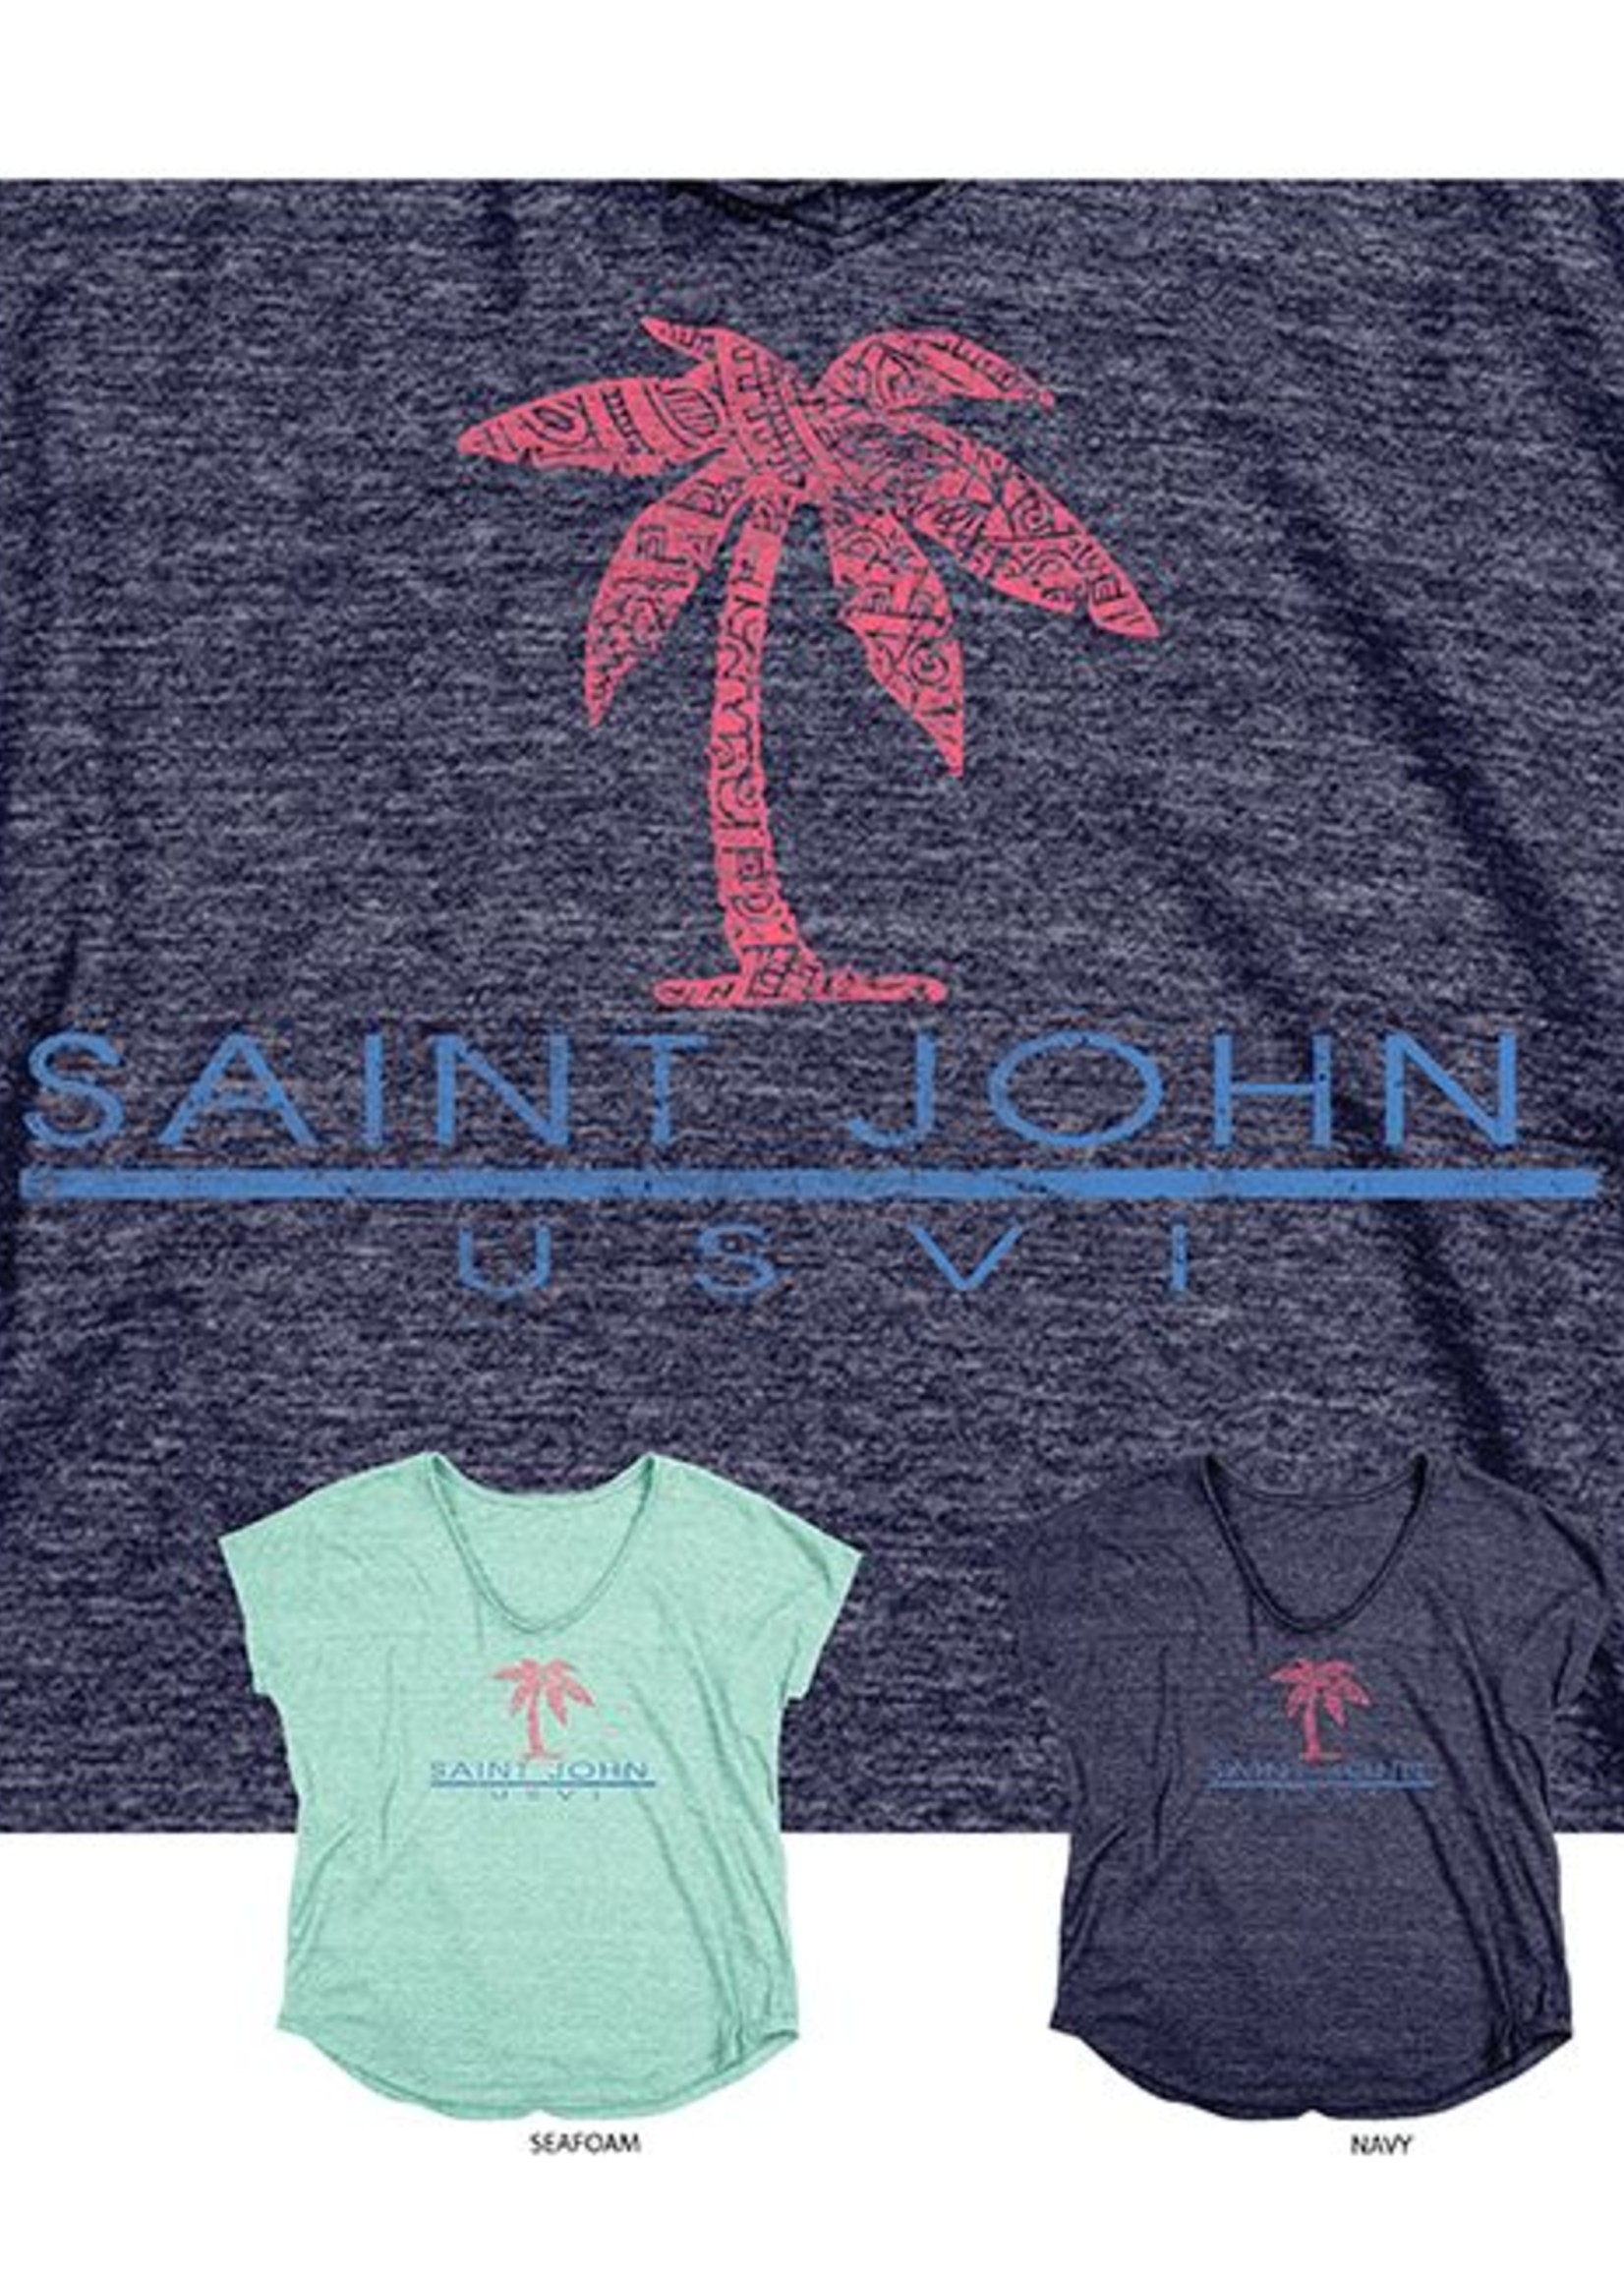 St. John Beach Bum